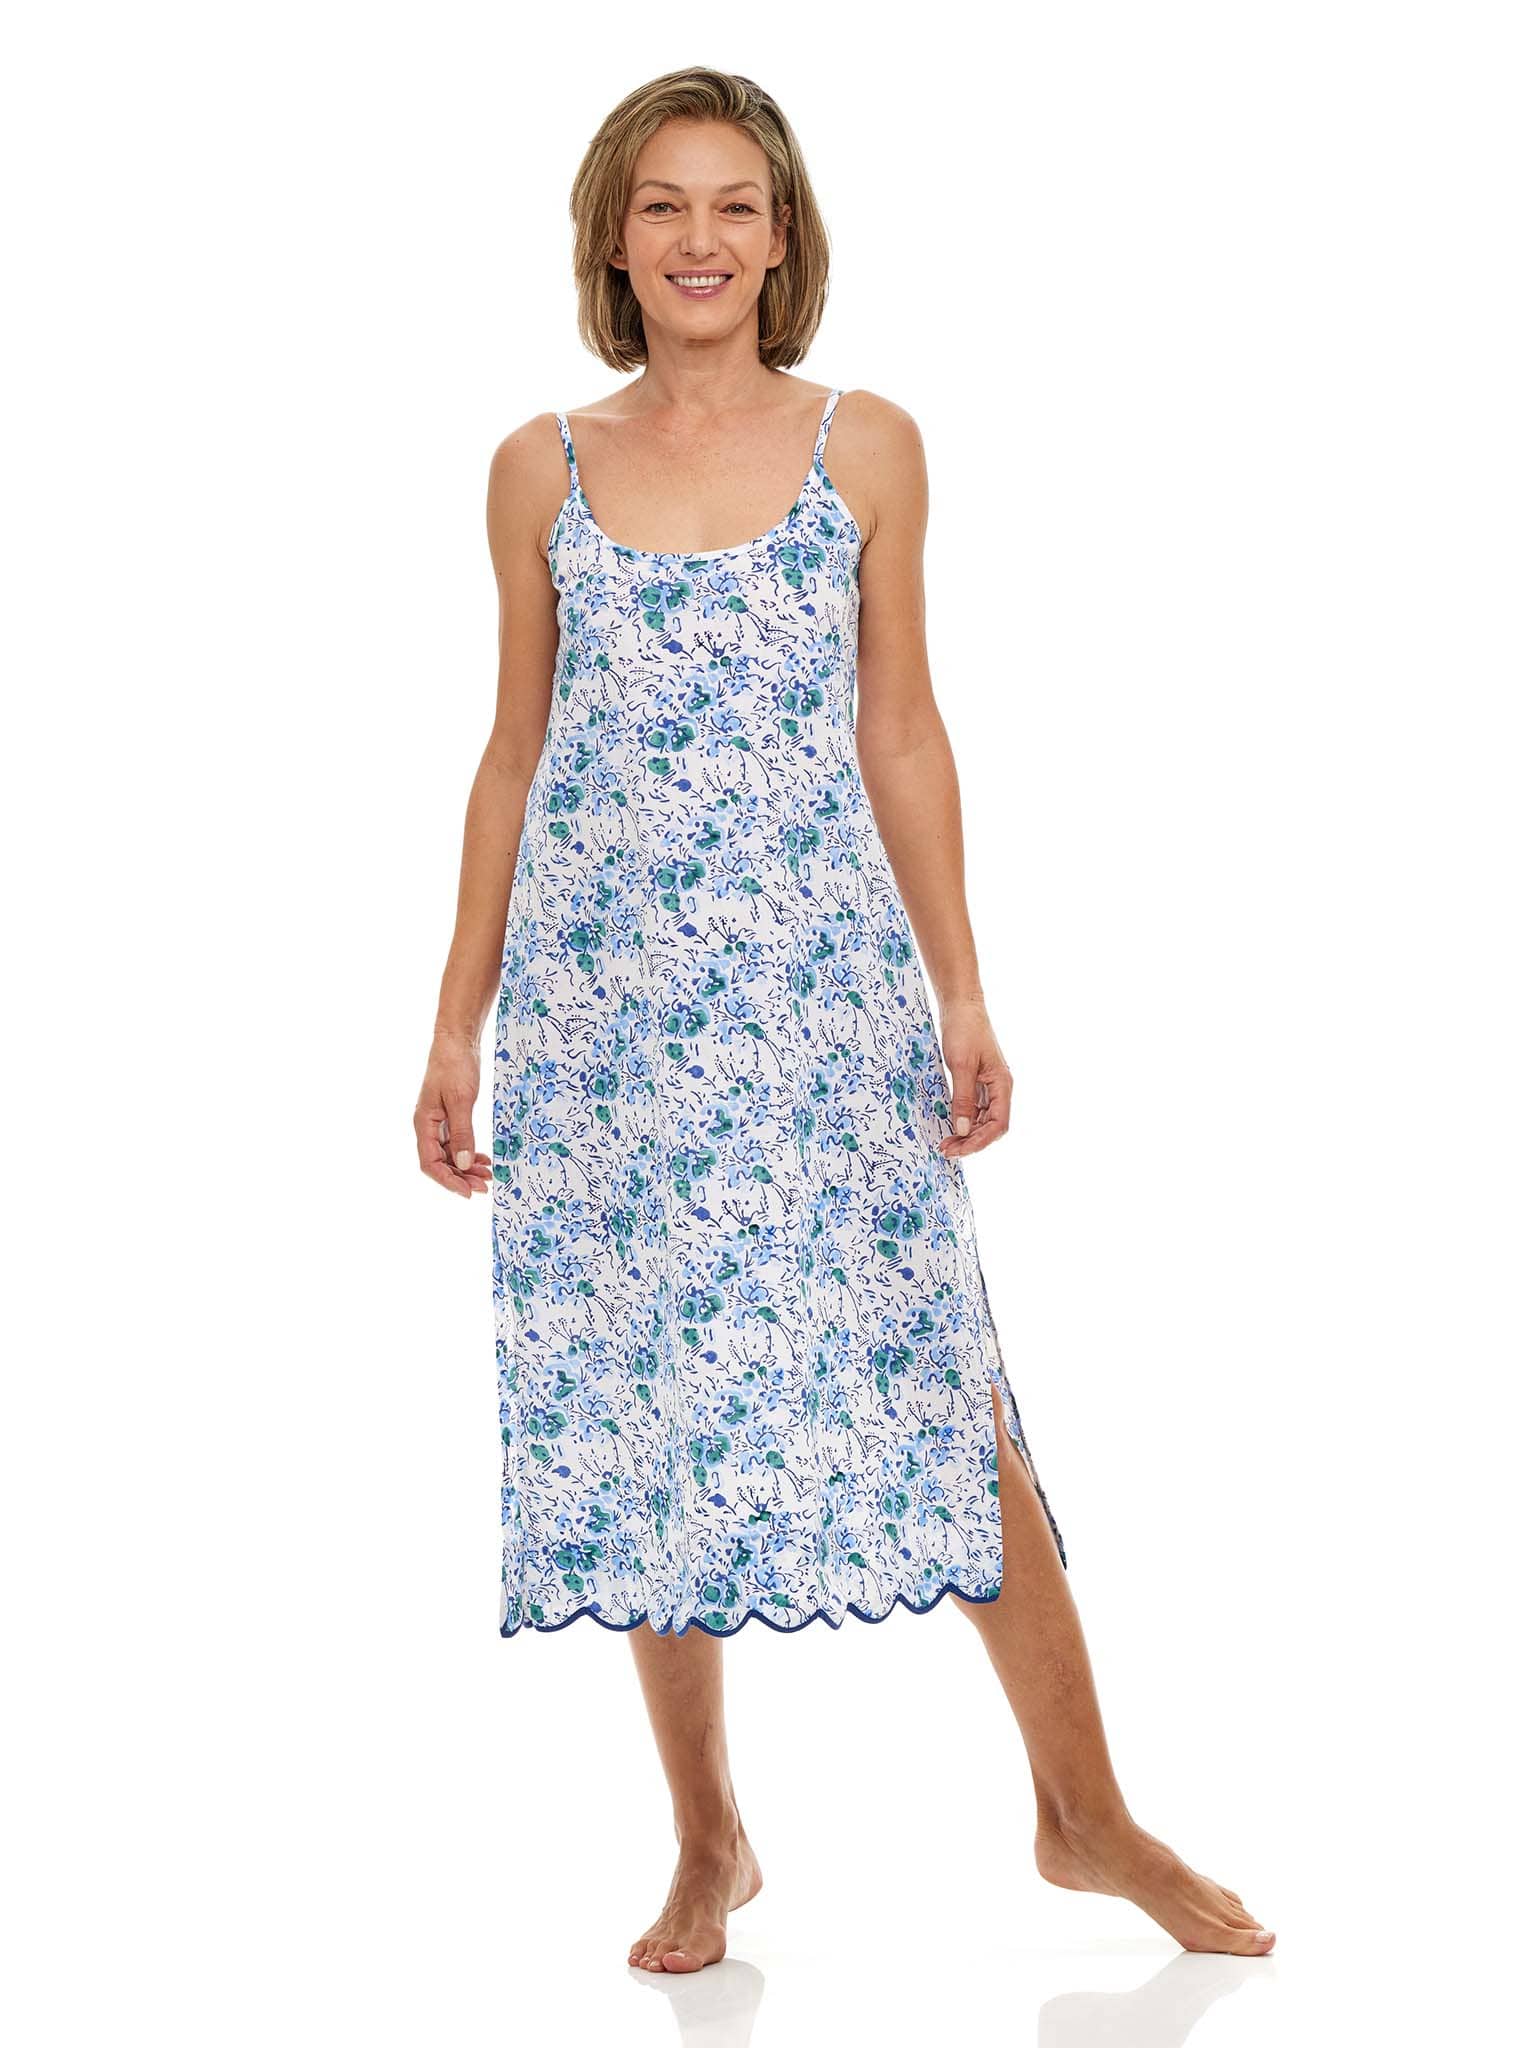 White Slip Nightgown with blue scalloping – Heidi Carey